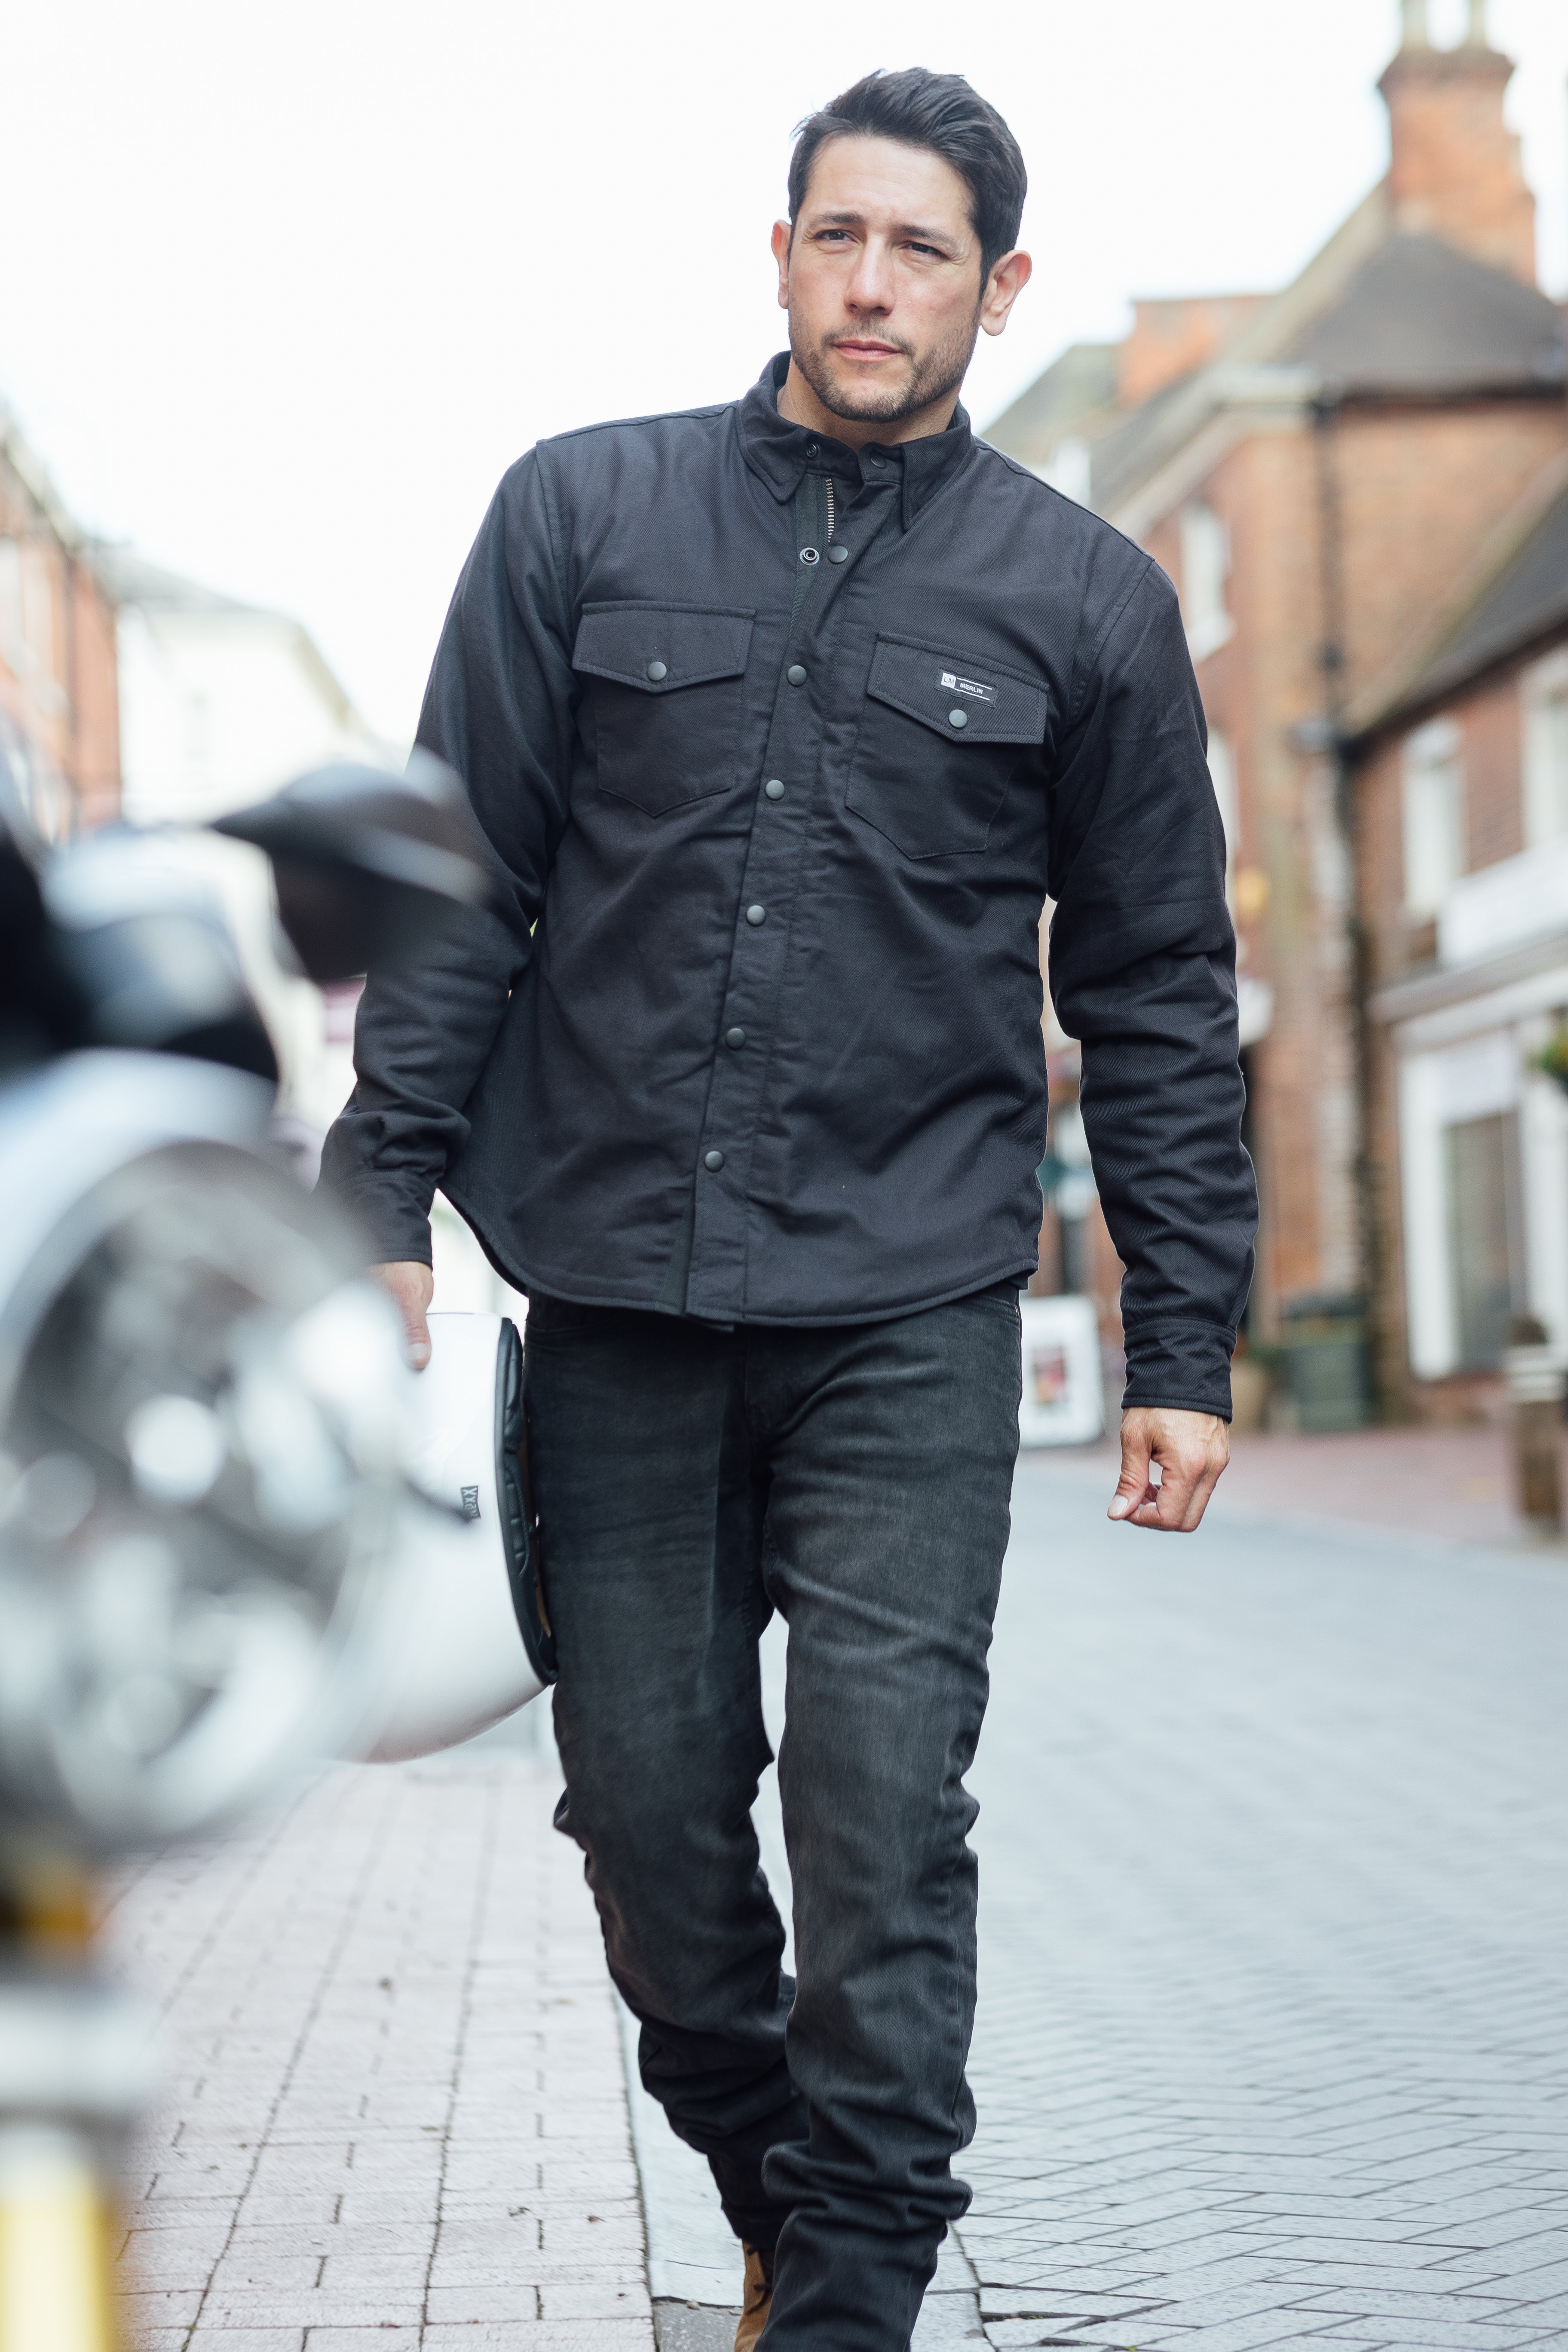 Merlin Axe Black Riding Shirt Built with Kevlar®